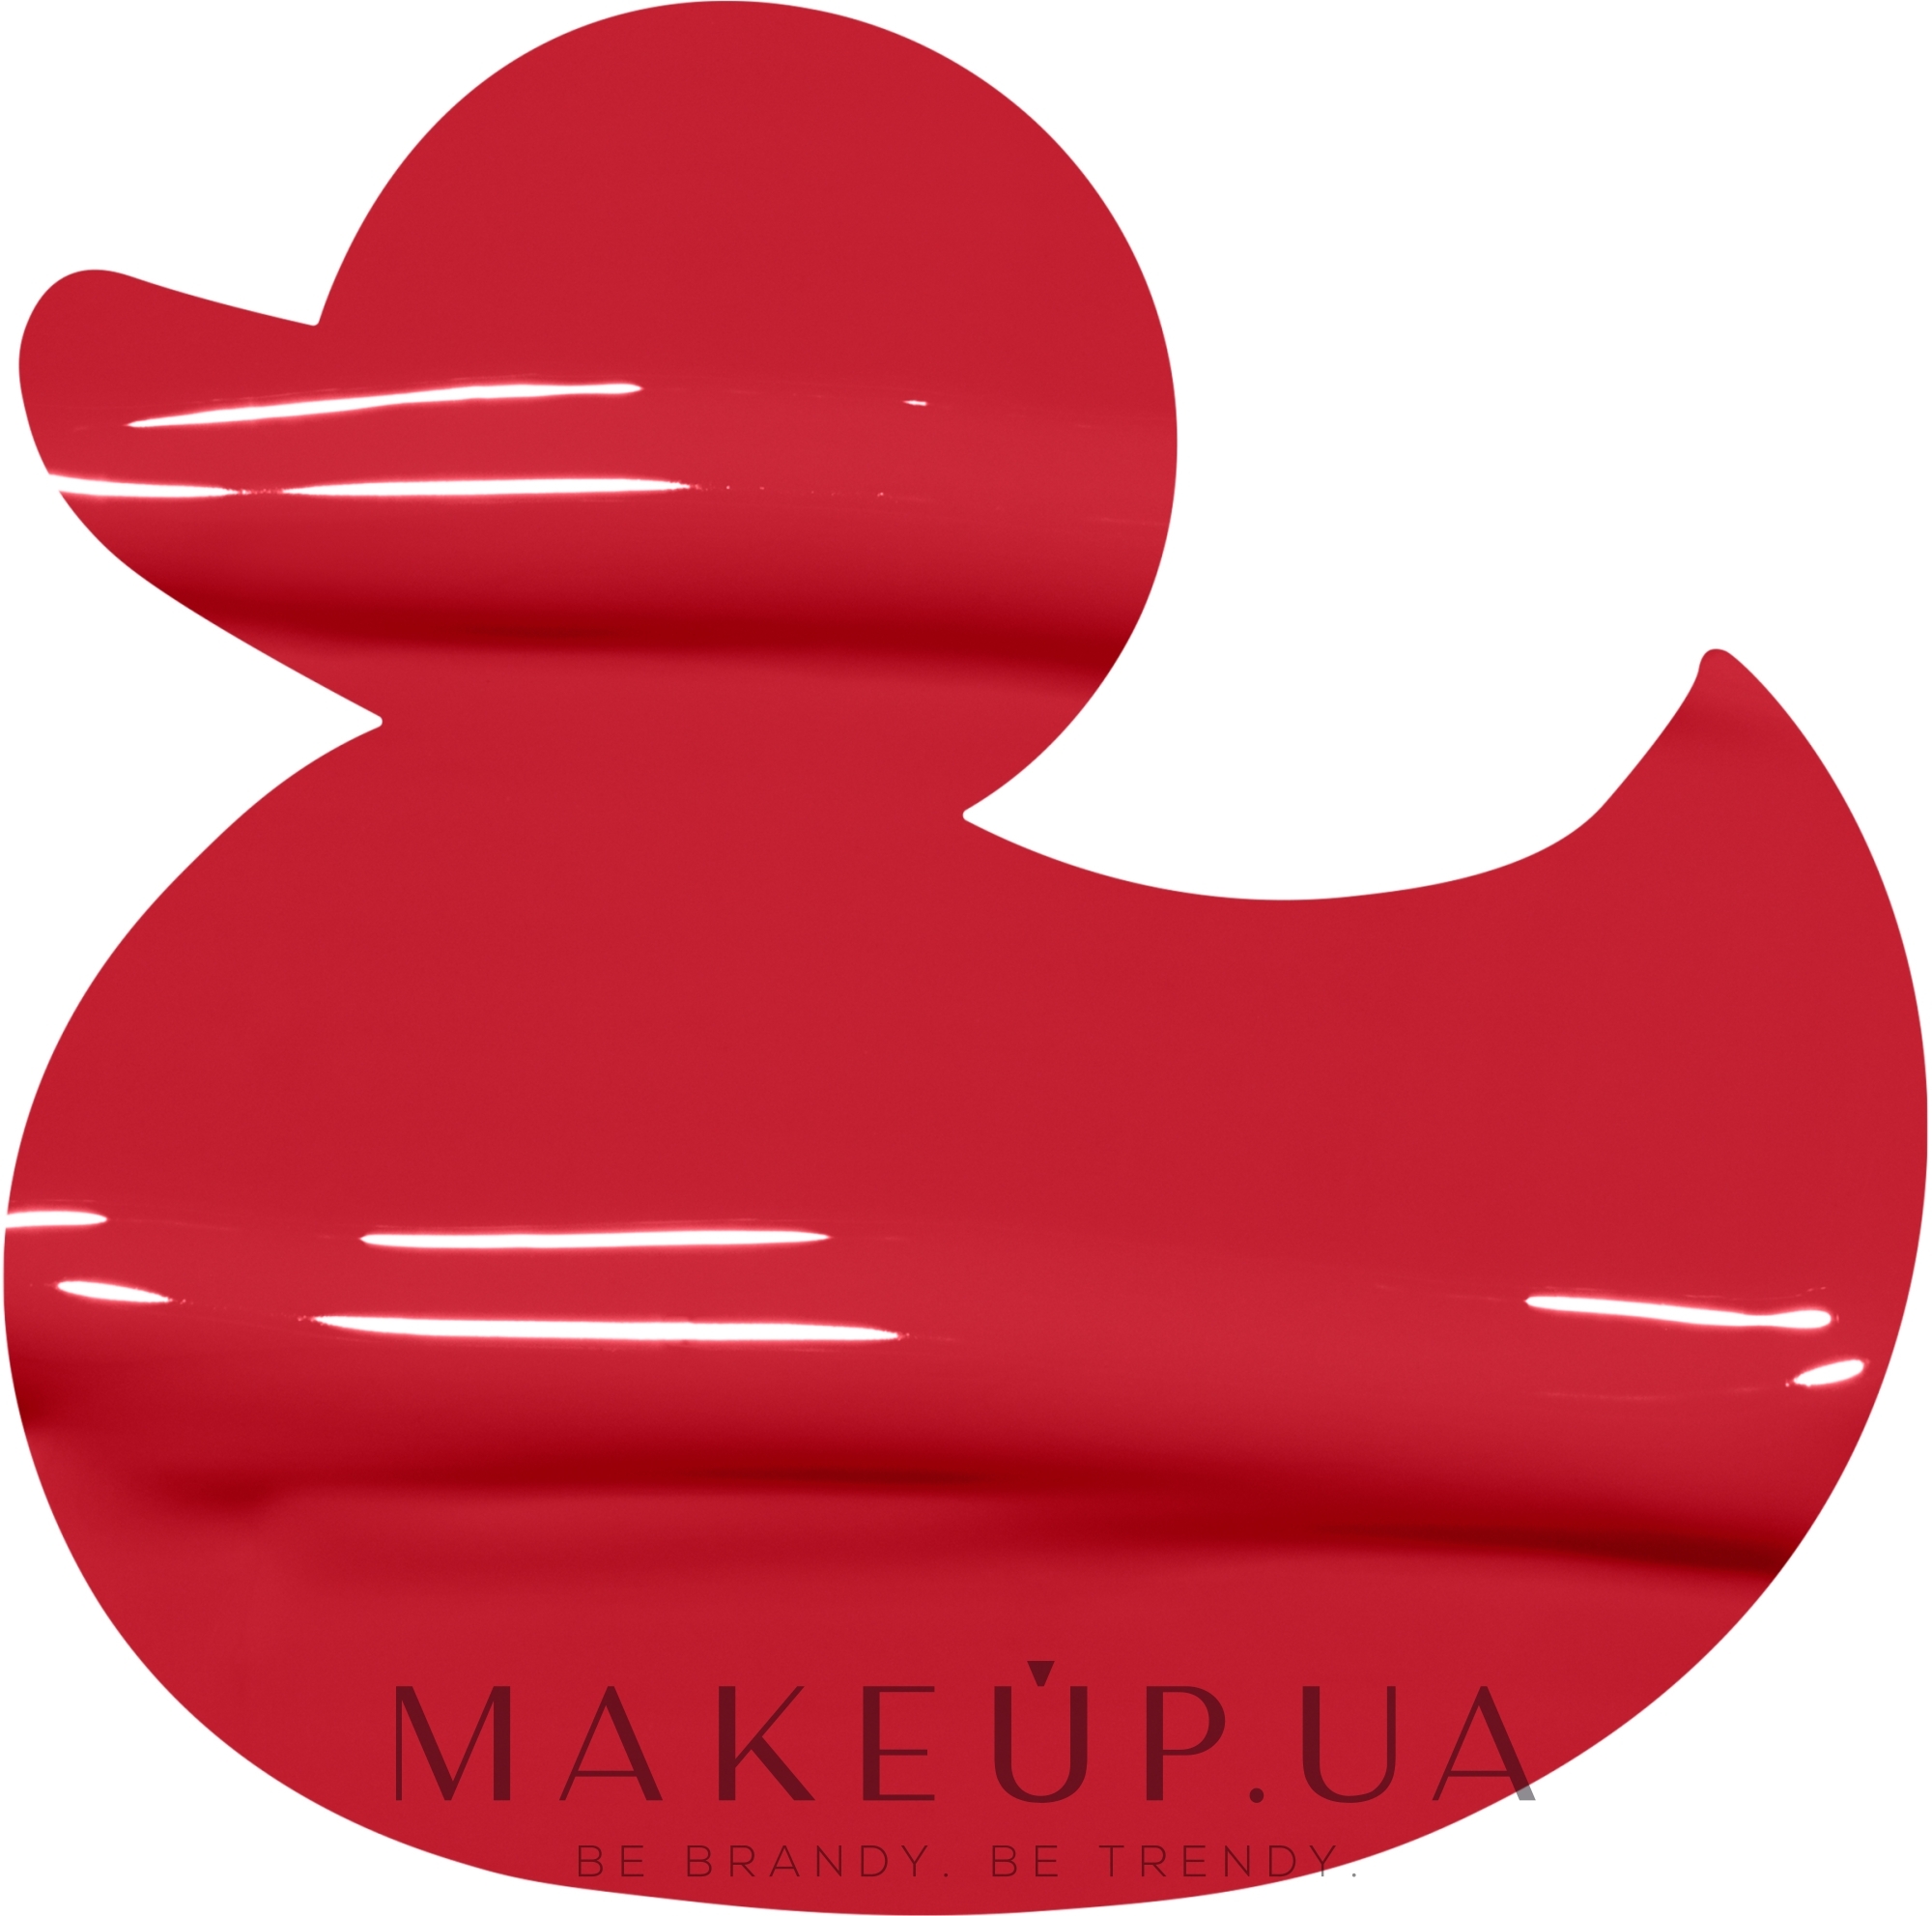 Високопігментований блиск-плампер для губ - Nyx Professional Makeup Duck Plump 